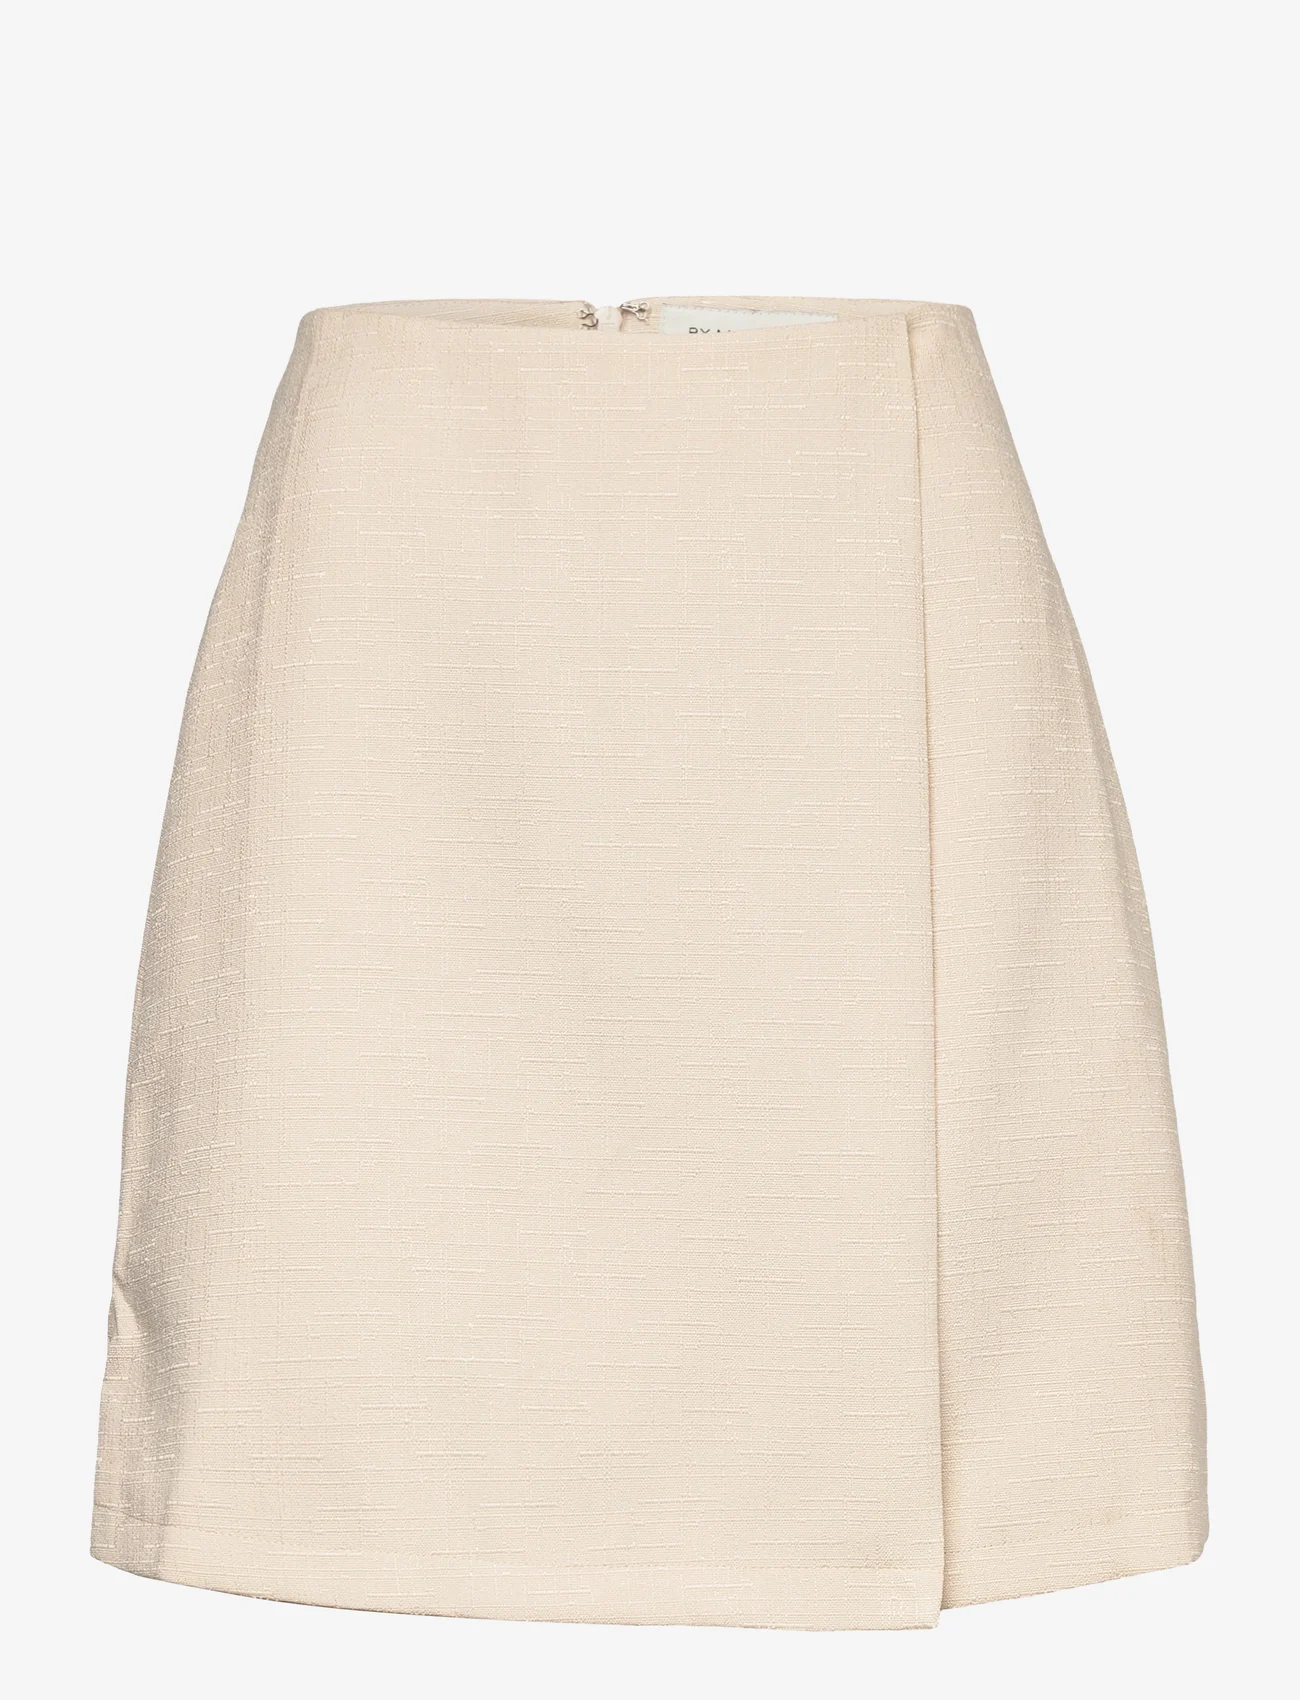 Malina - Eden Skirt - short skirts - macadamia - 0